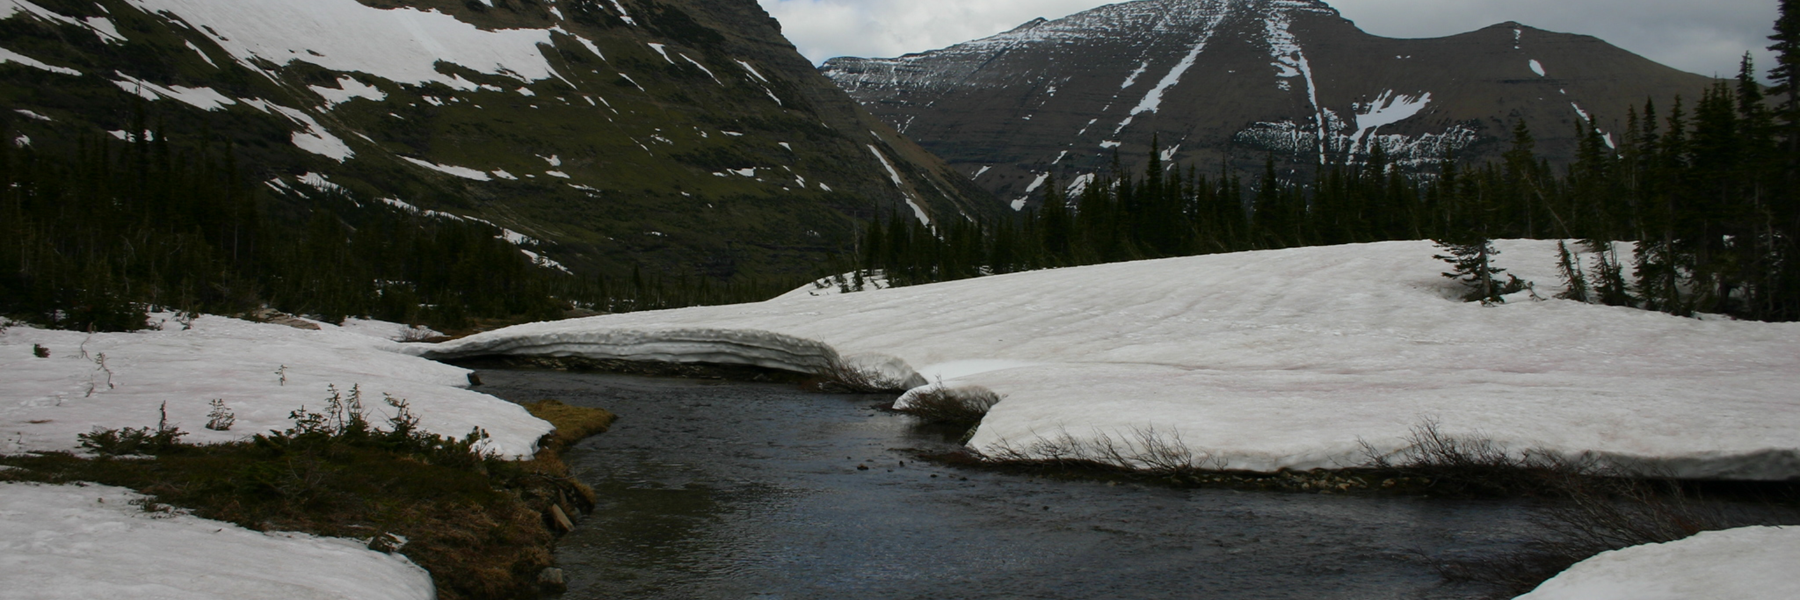 Snow Melts into River near Iceberg Lake in Glacier National Park. Credit: Wing-Chi Poon (CC BY-SA 2.5)